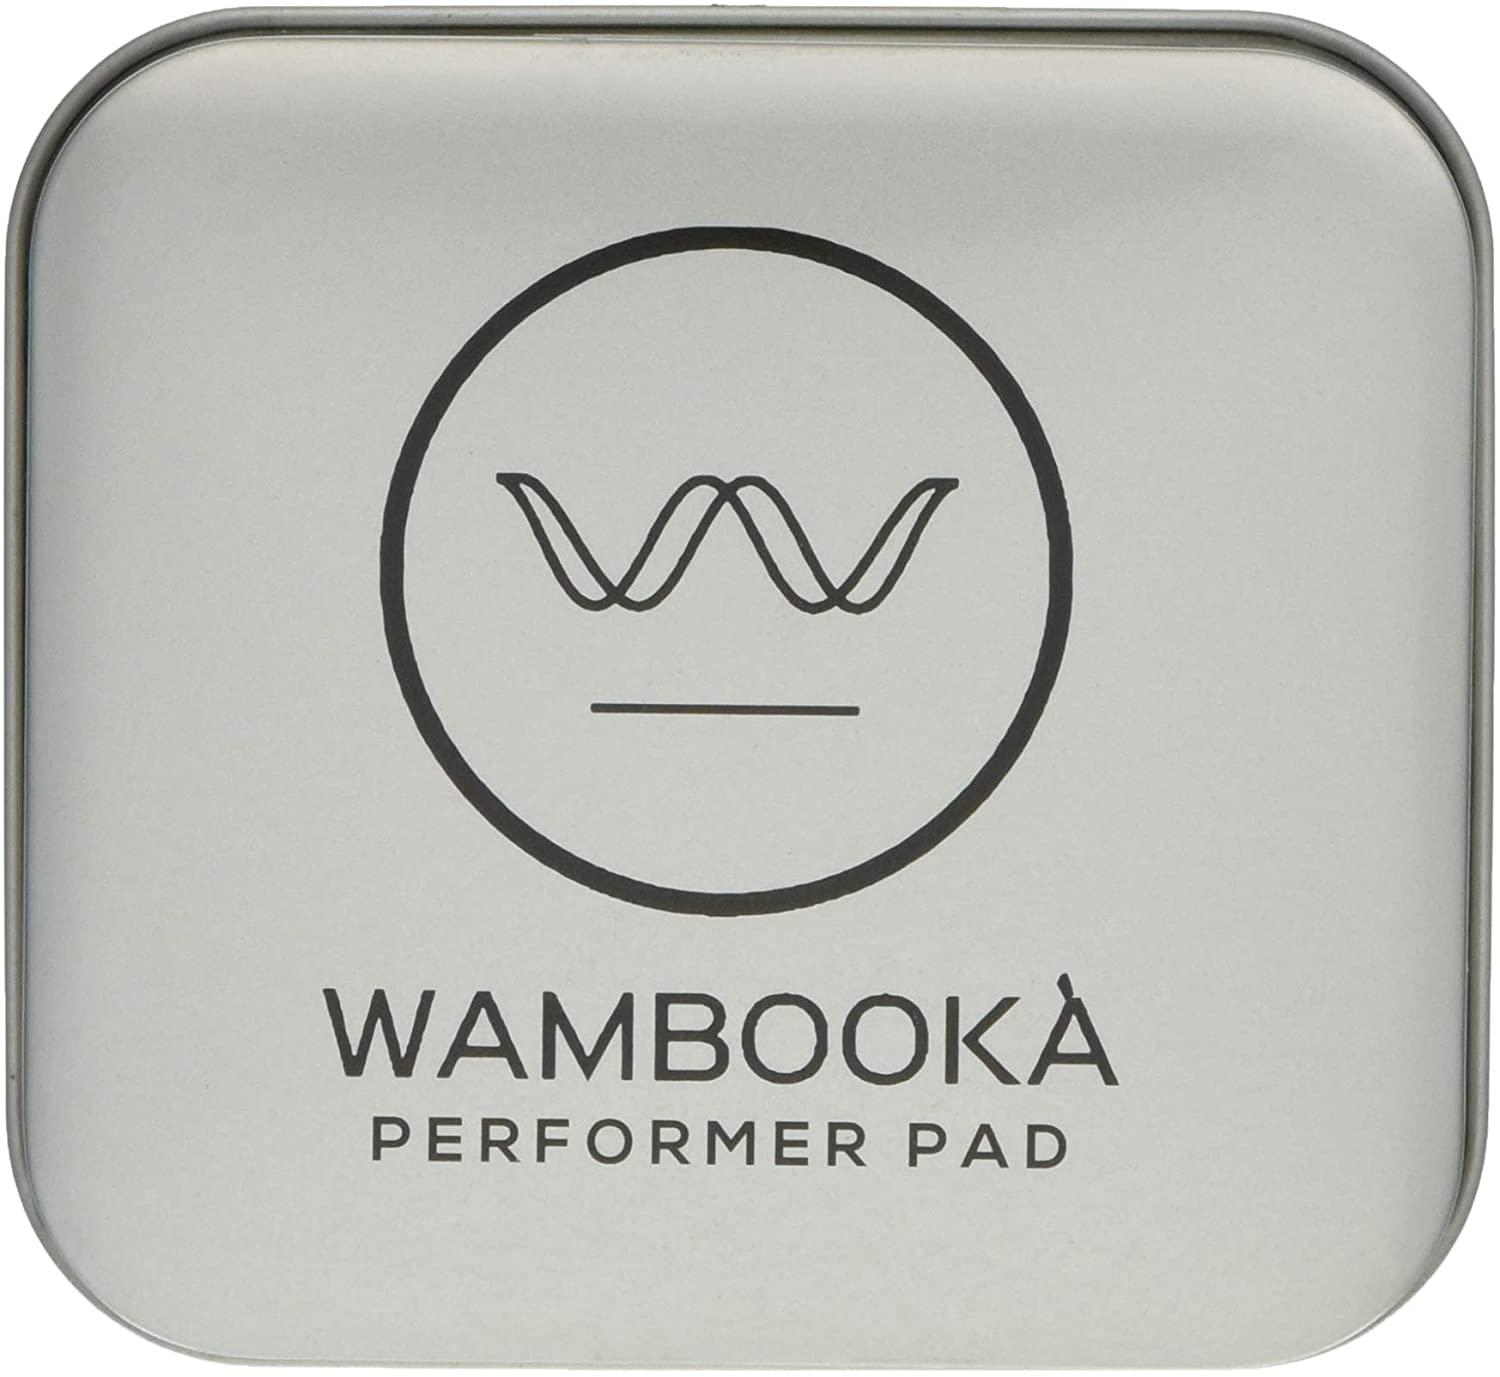 Wambooka - Sordinas de Gel Performer Pad Mod.WPP4_21